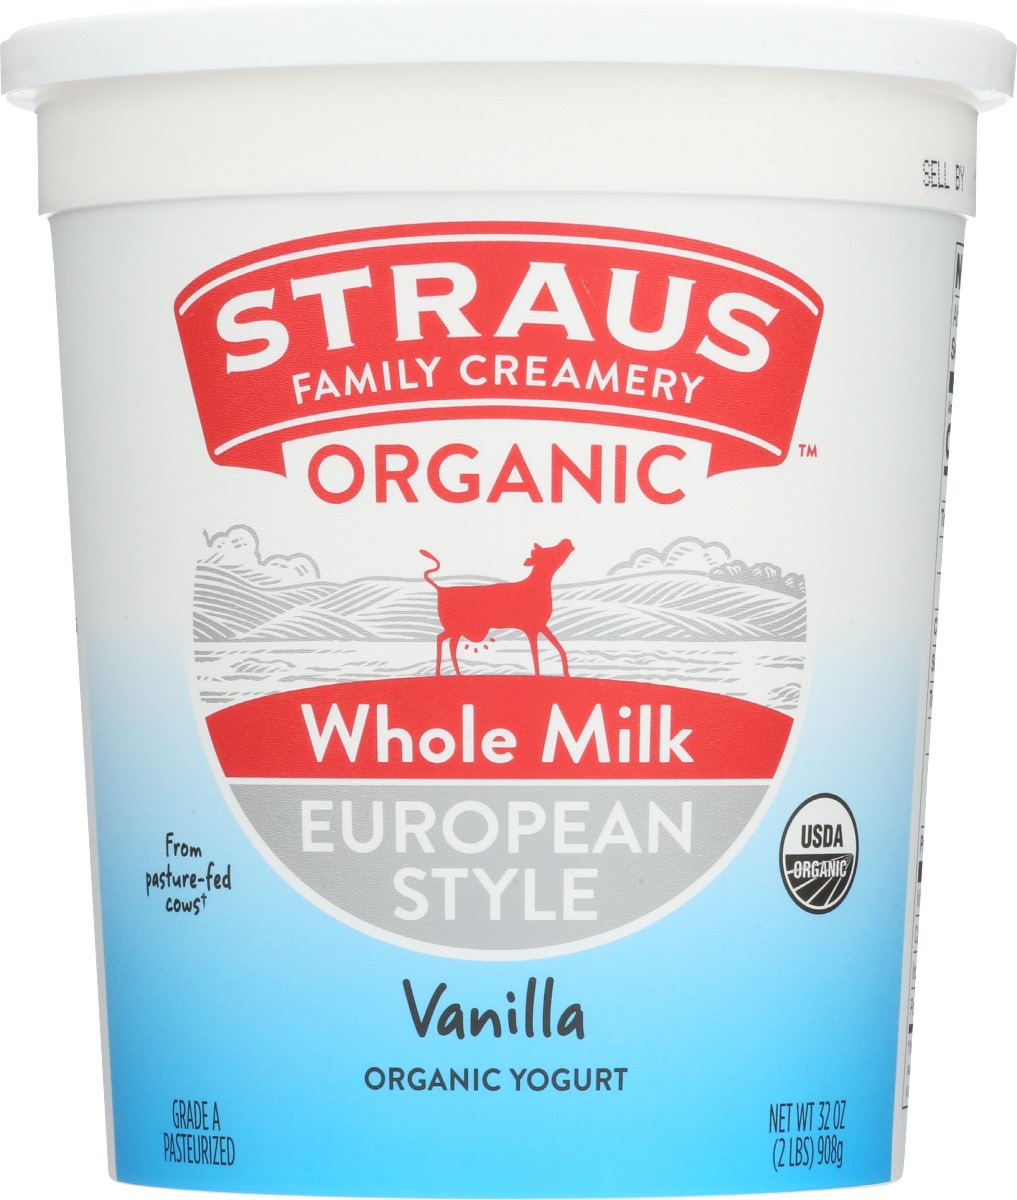 European Style Organic Whole Milk Yogurt - 784830000828